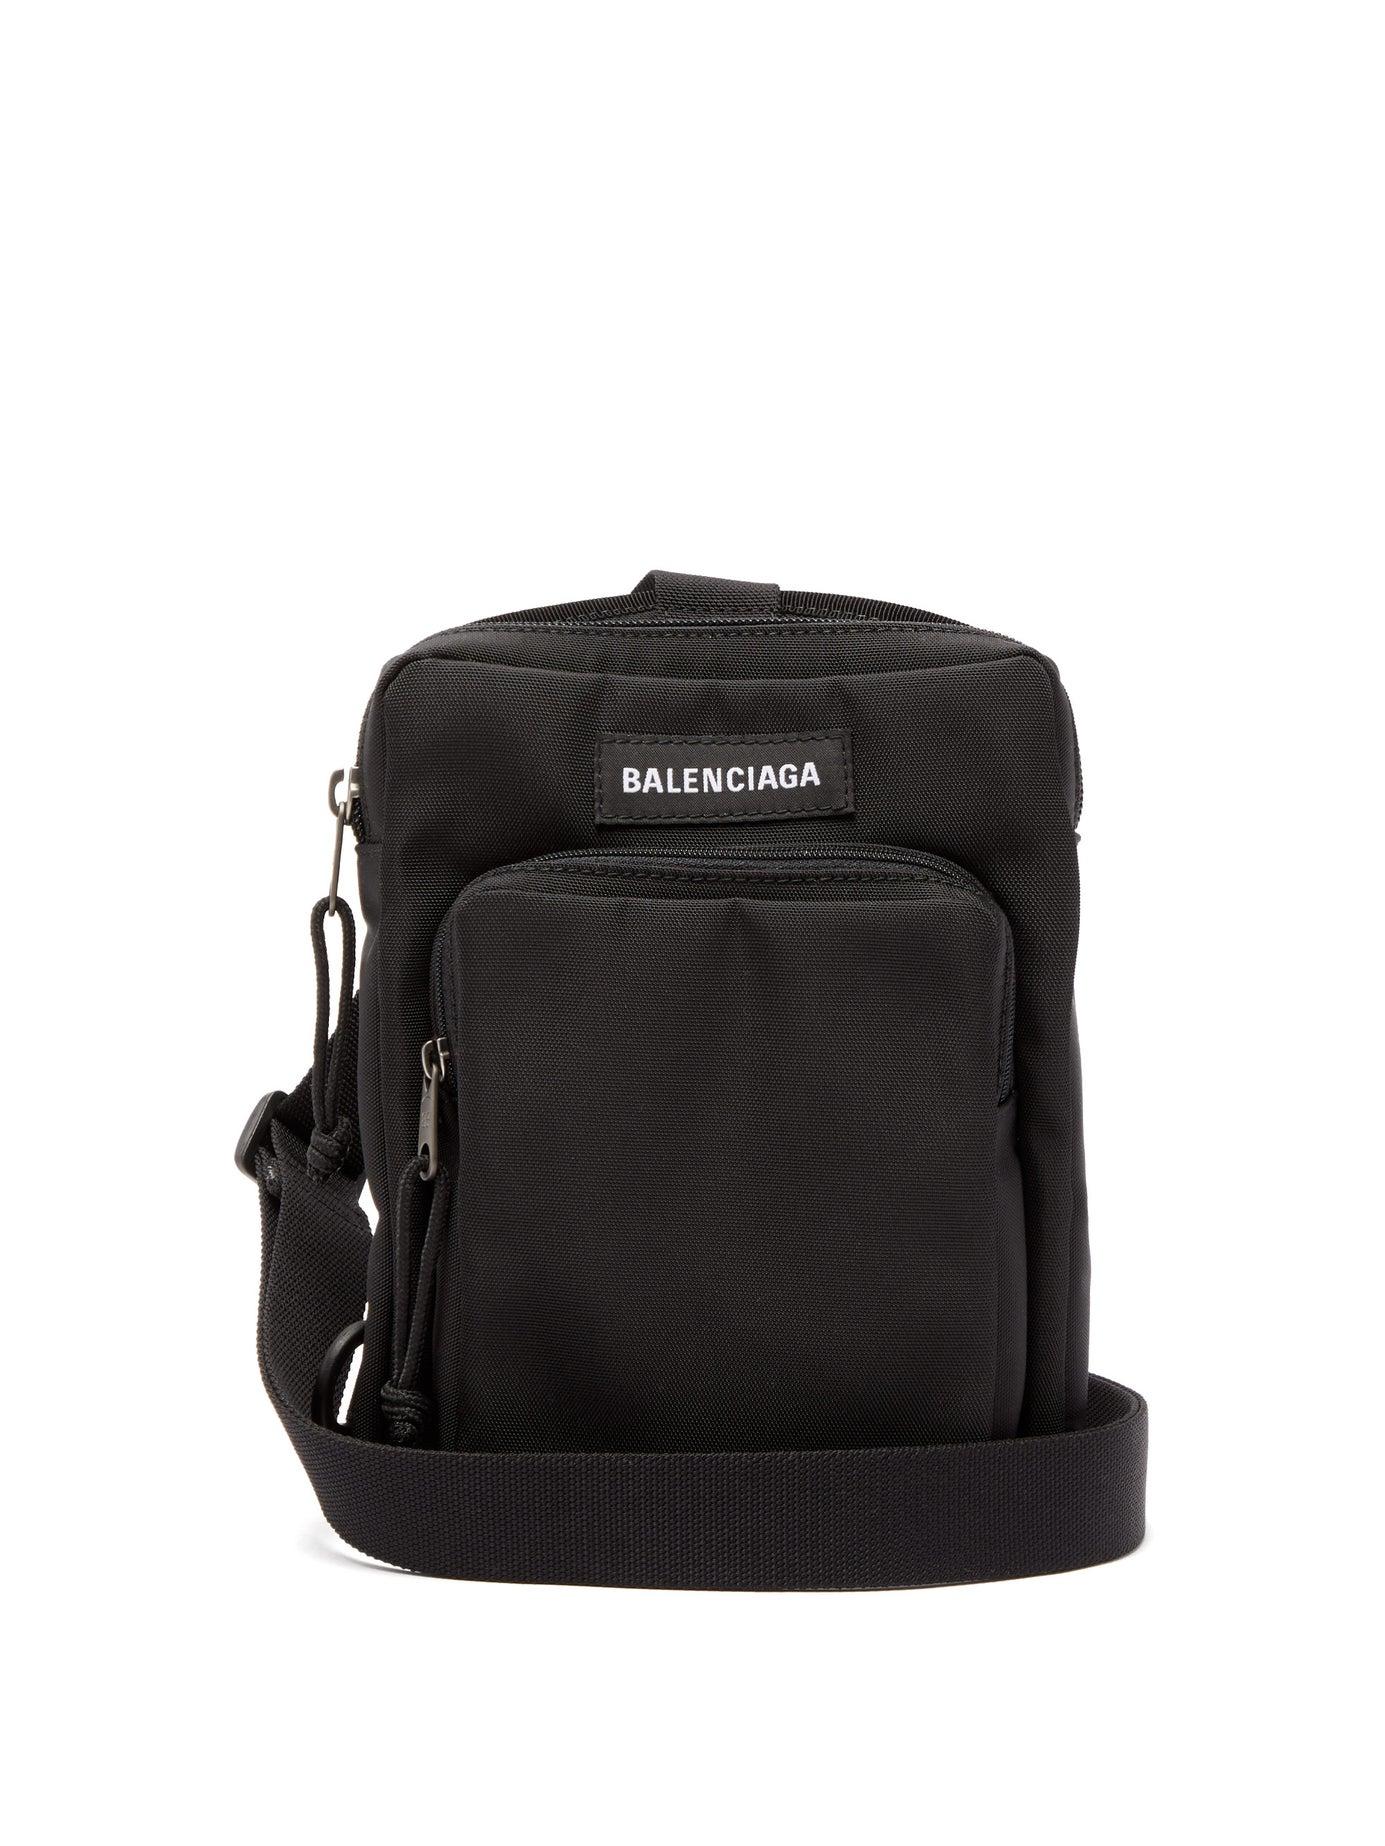 Balenciaga Logo-patch Canvas Cross-body Bag in Black for Men - Lyst